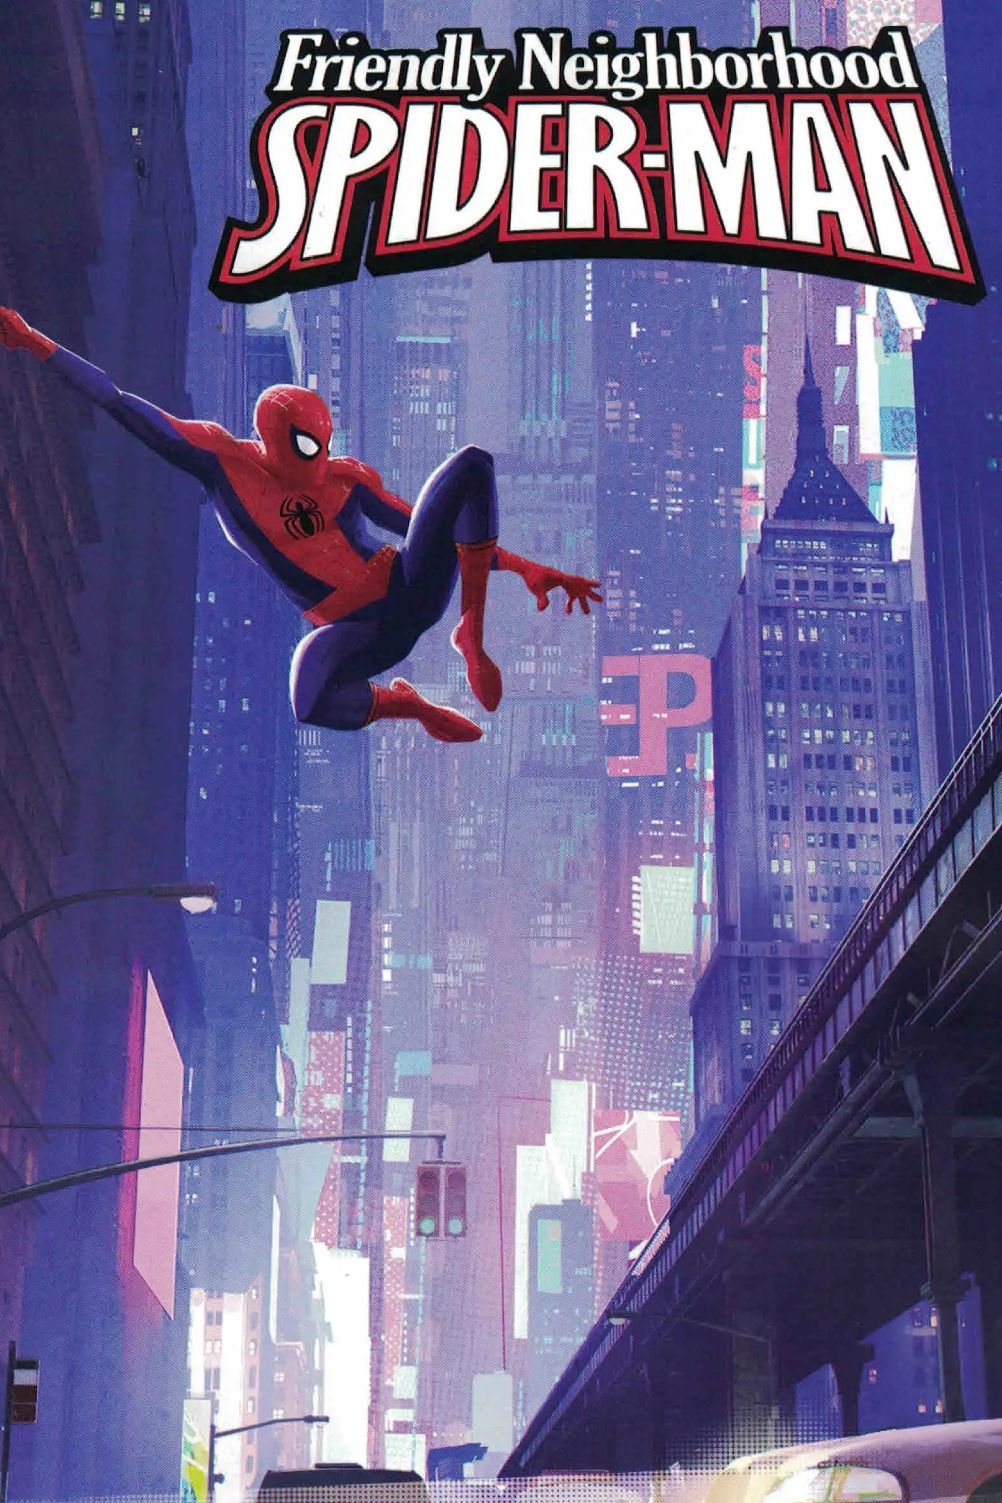 Friendly Neighborhood Spider-Man temporary poster